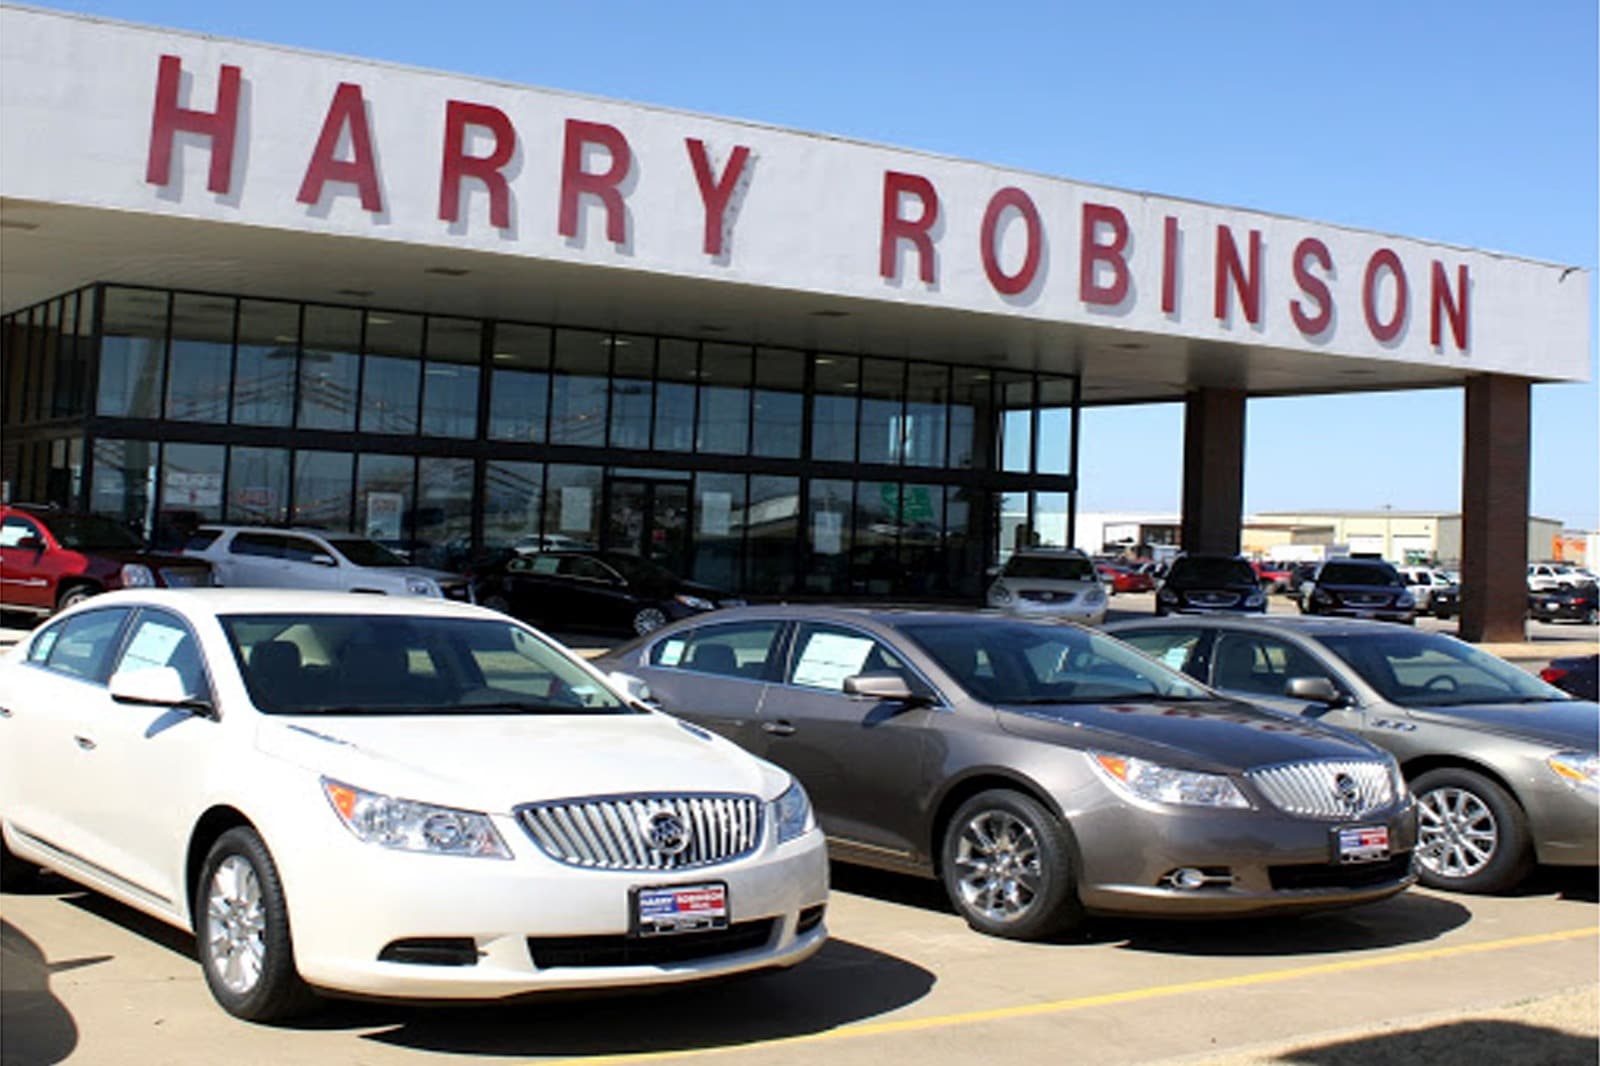 Arkansas Buick GMC Dealer Creates a VIP Experience for Car Shoppers